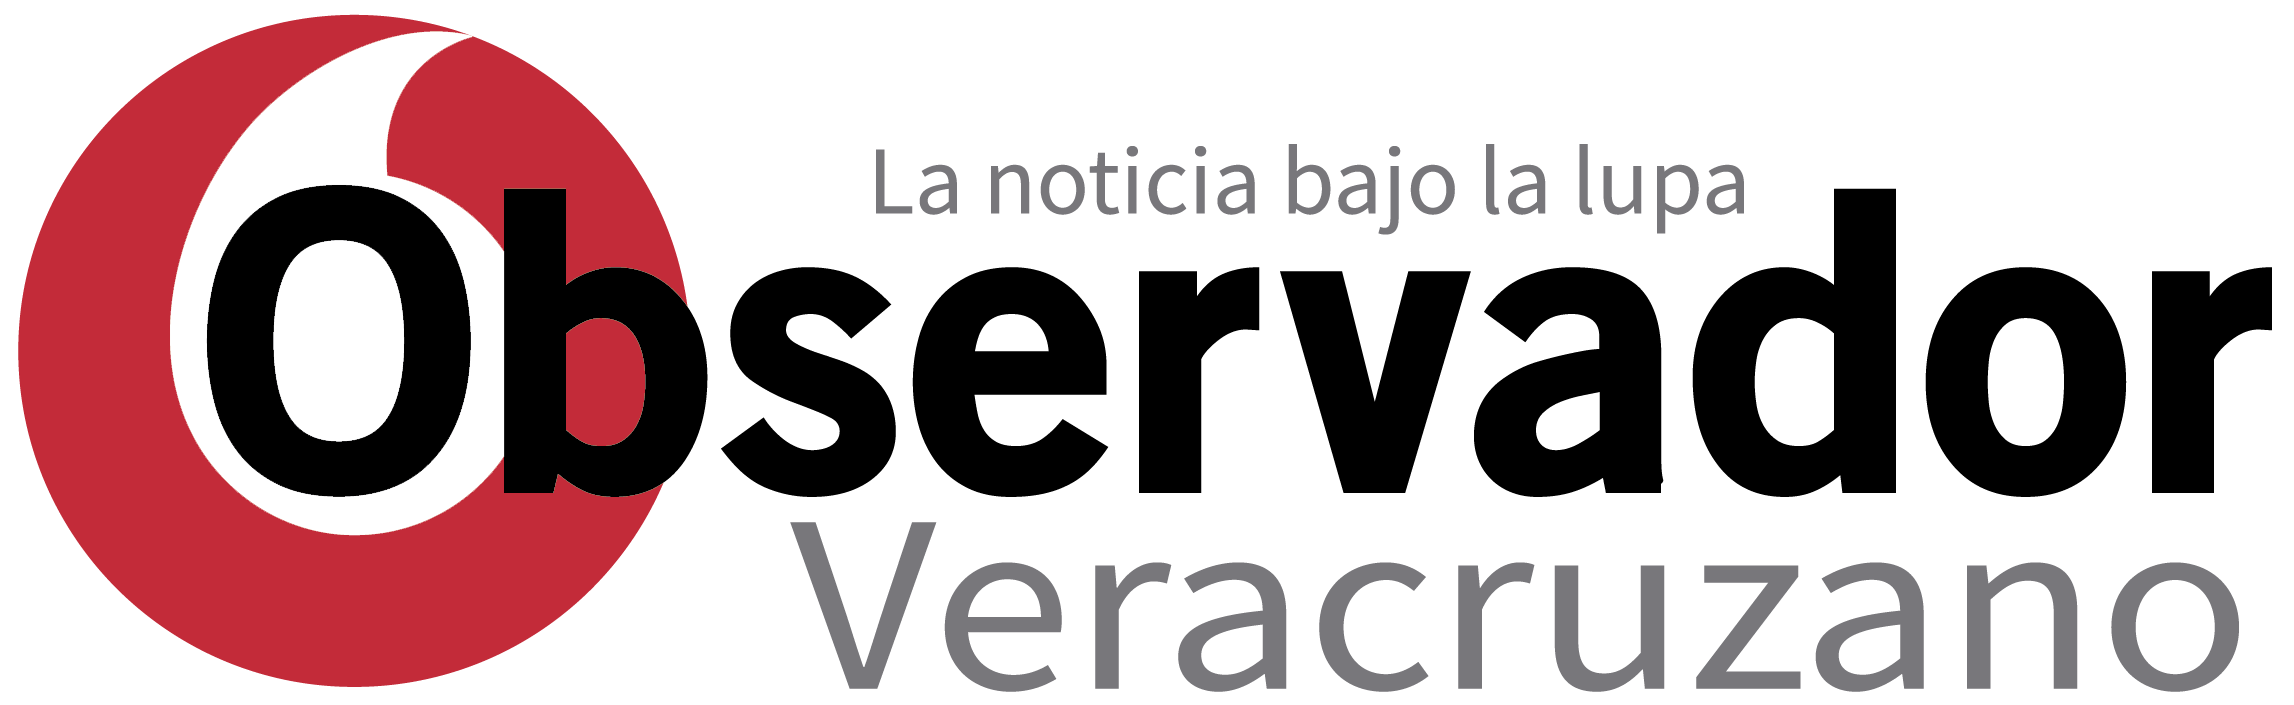 Observador Veracruzano